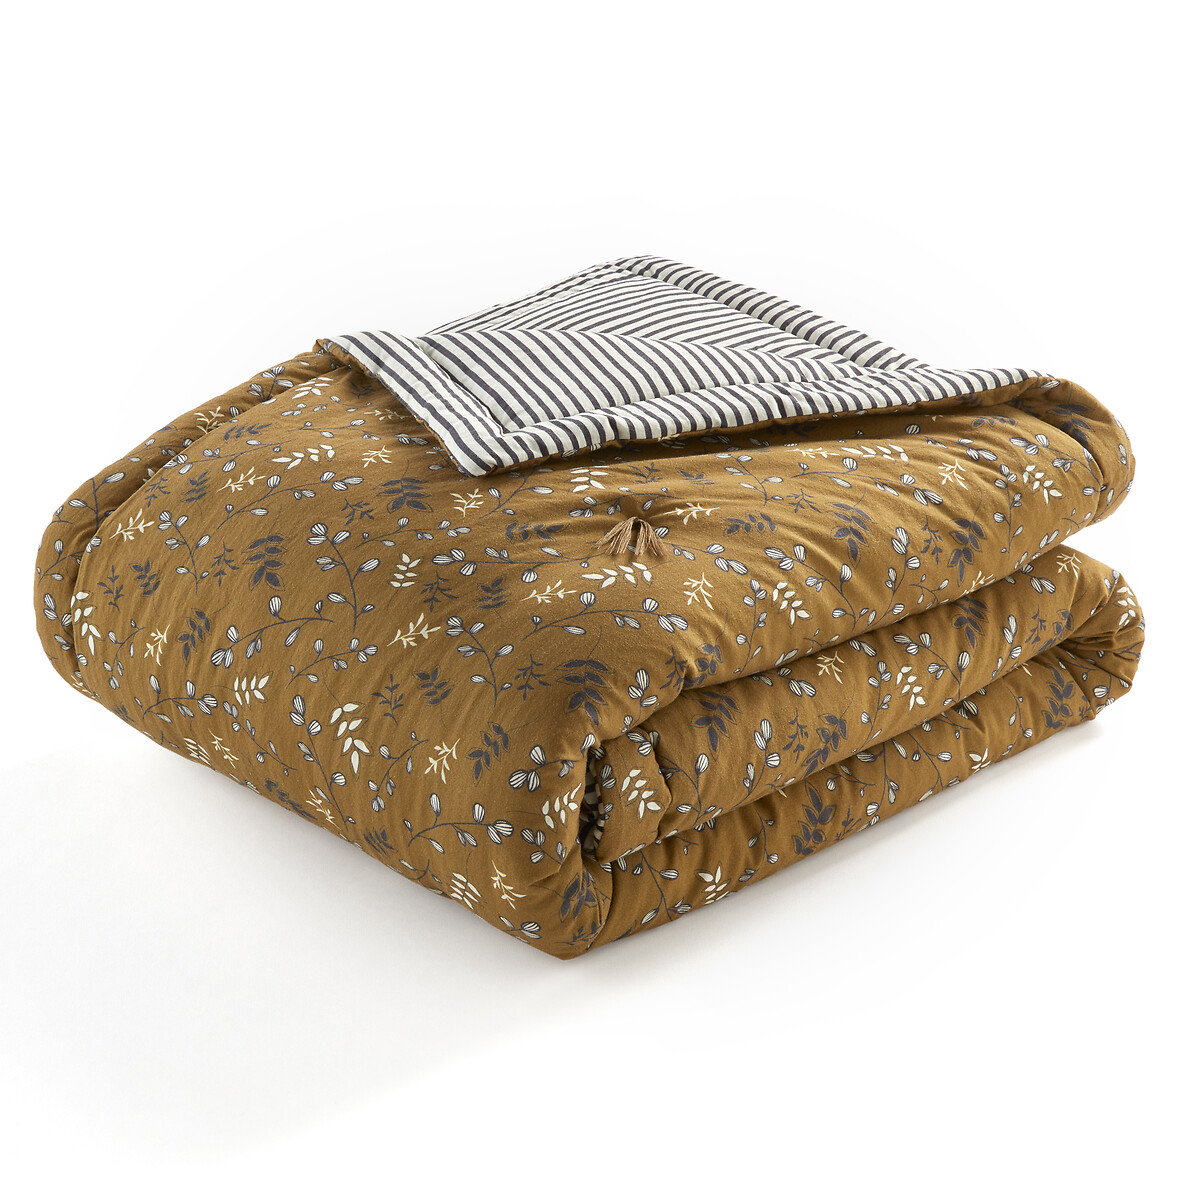 Одеяло LA REDOUTE INTERIEURS Из стираного хлопка Oita 150 x 150 см каштановый, размер 150 x 150 см - фото 3